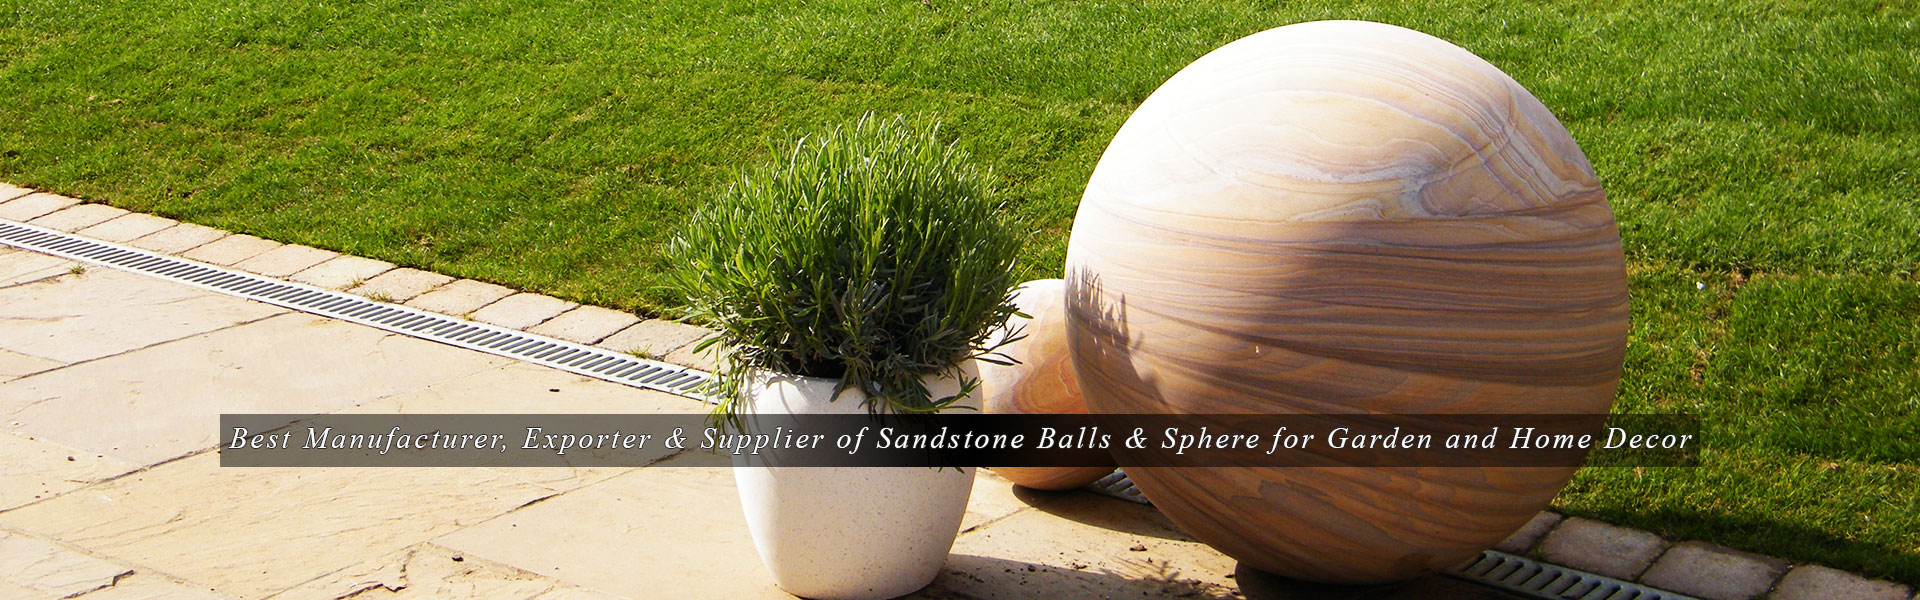 Sandstone Balls Suppliers in India